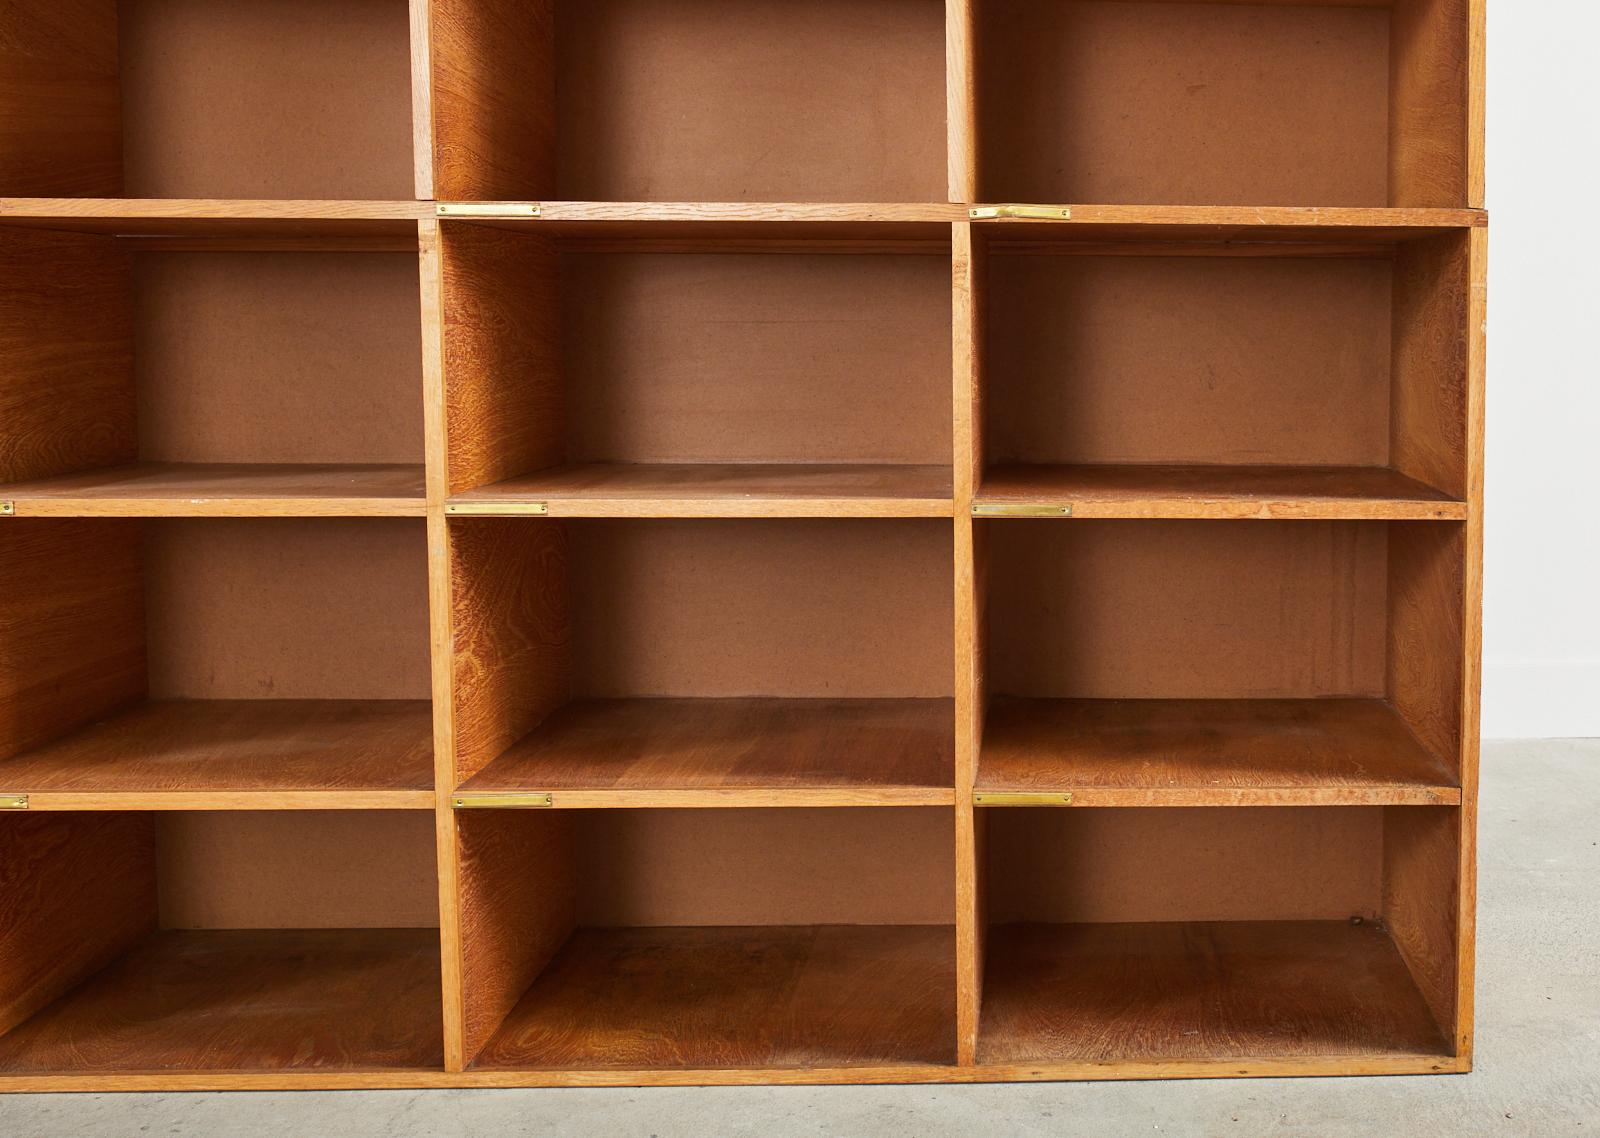 20th Century English Oak Pigeon Hole Haberdashery Cabinet Shelves or Bookcase For Sale